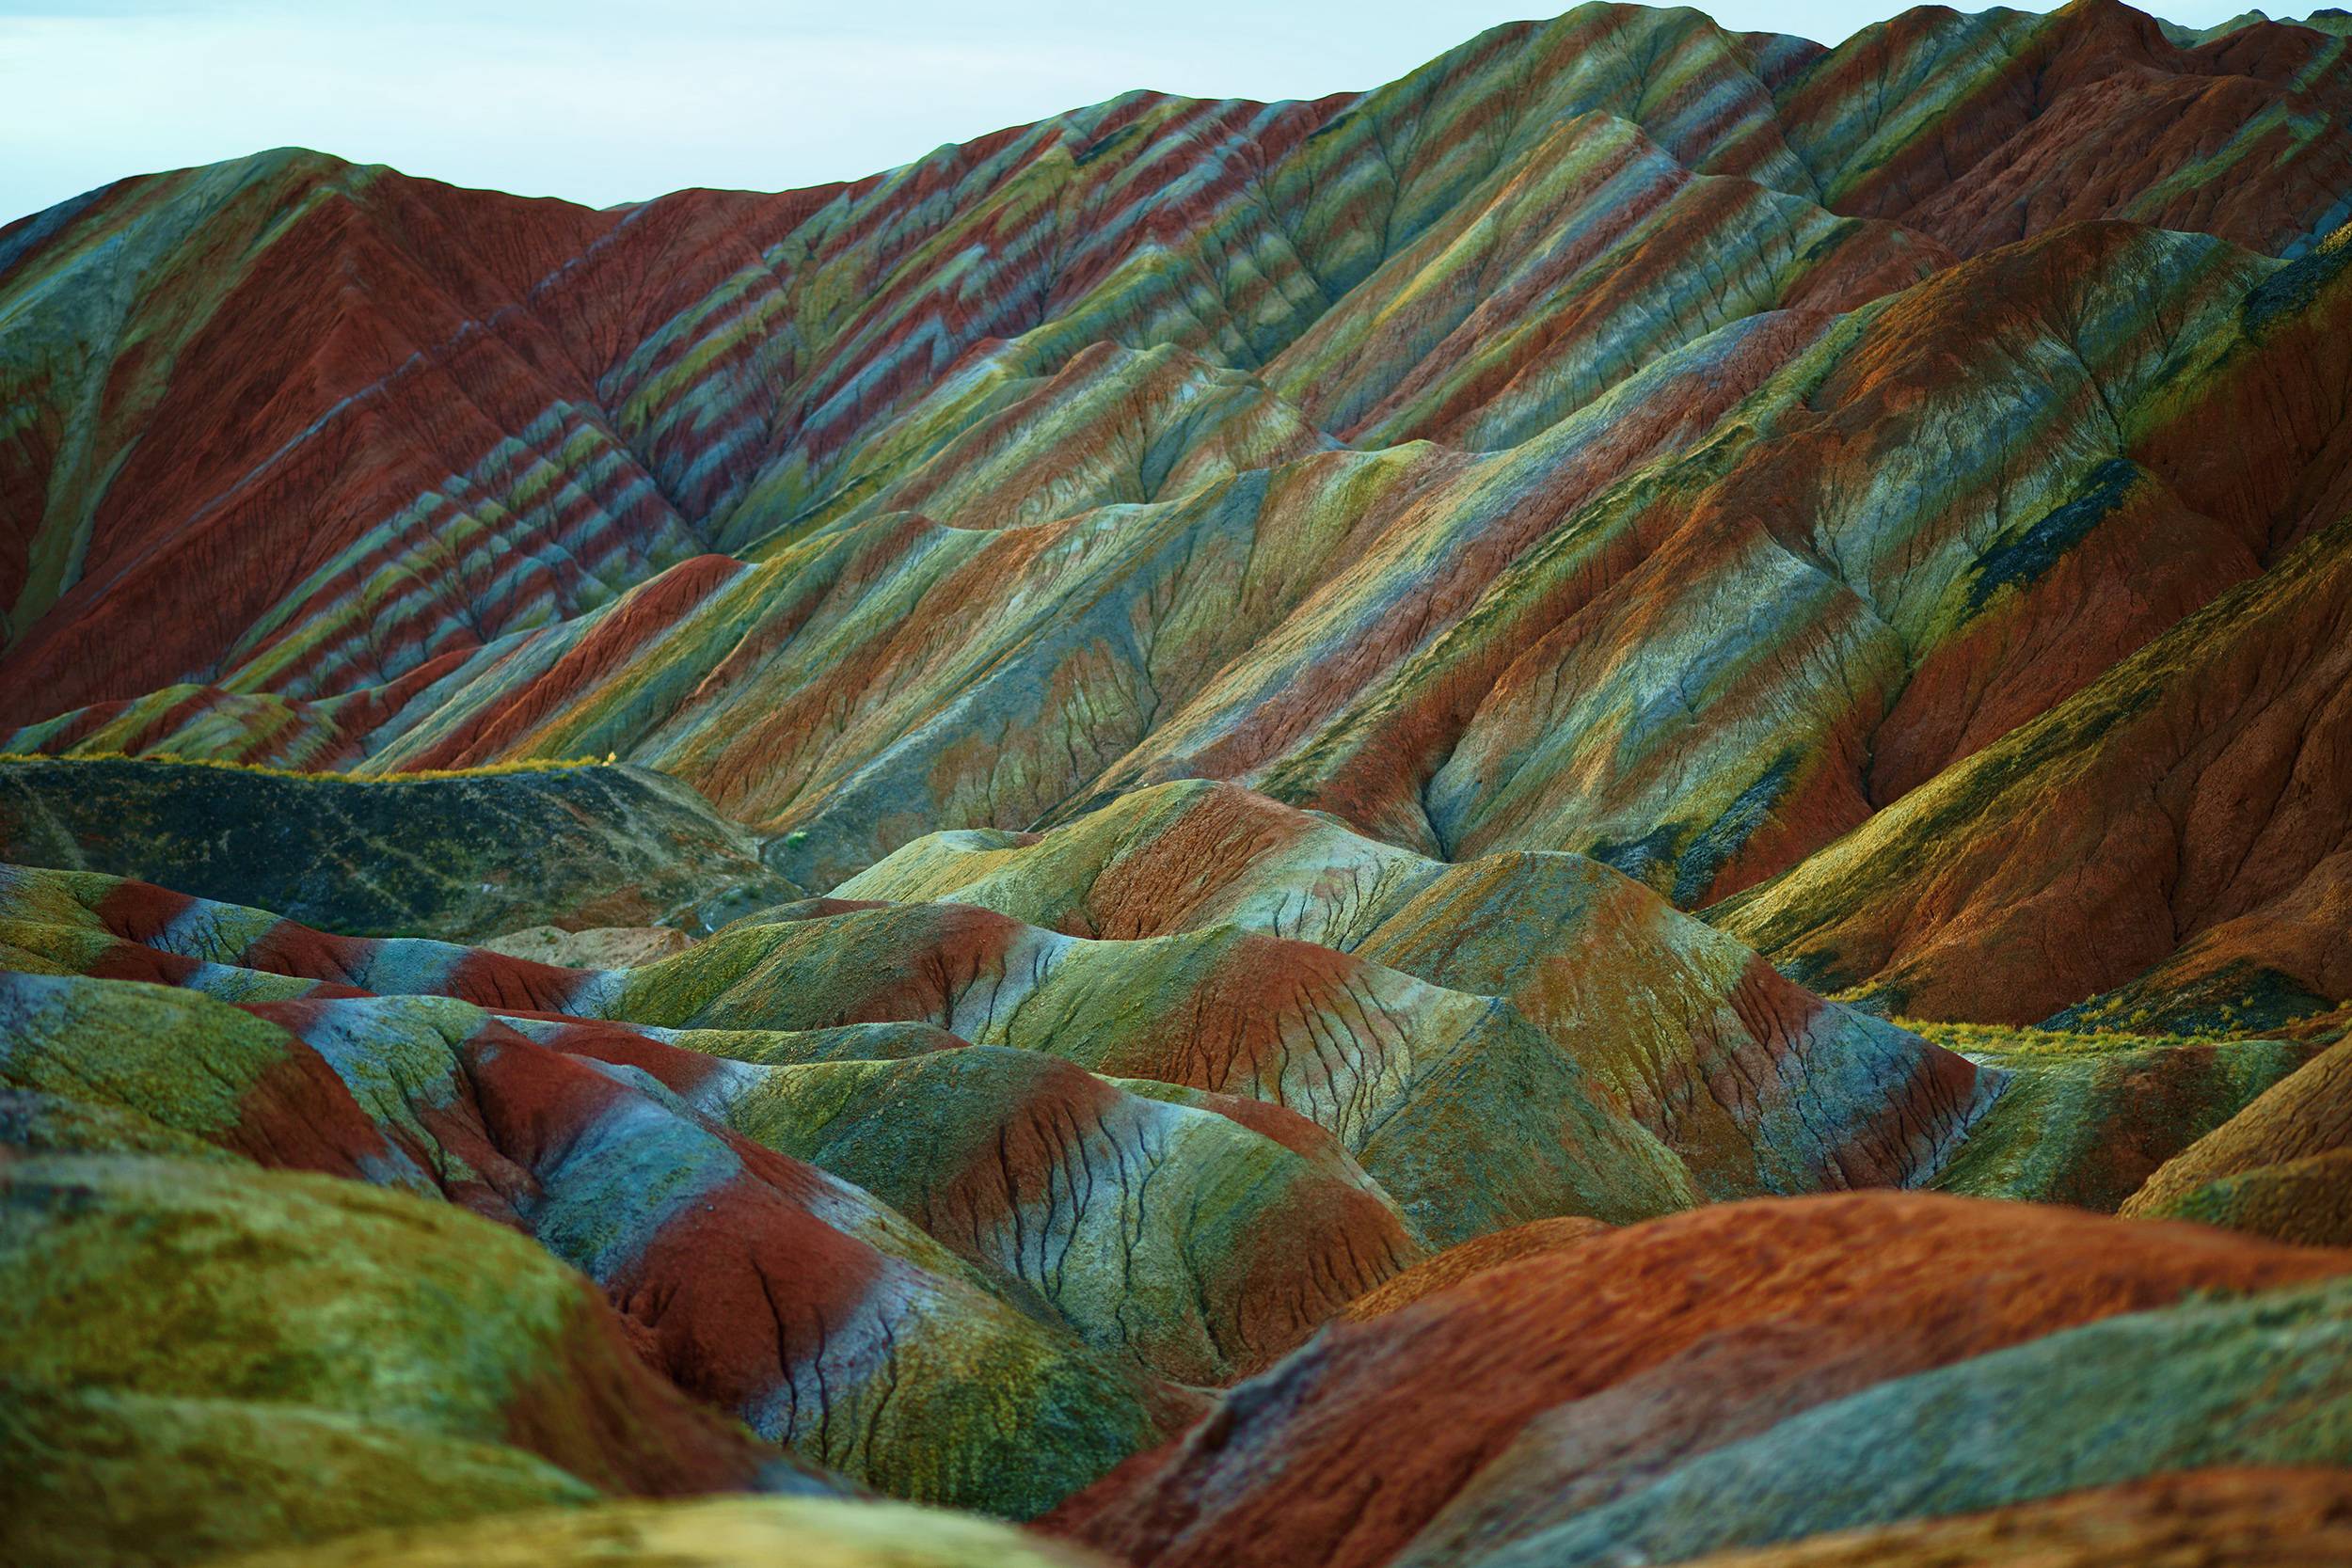 Natural Rock colorful rock formations at the Zhangye Danxia Landform